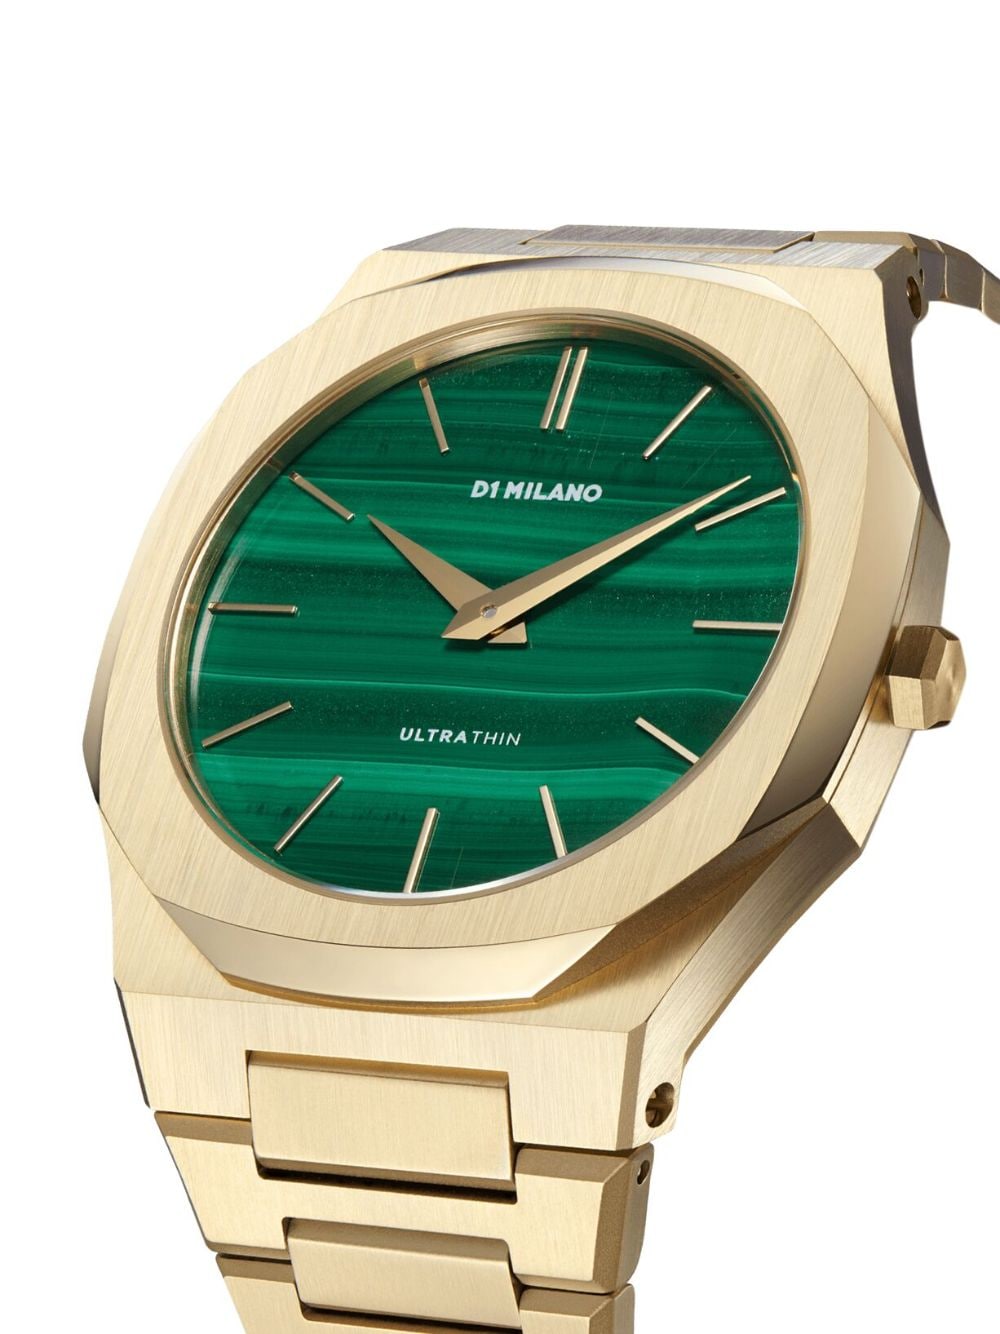 D1 Milano Ultra Thin horloge - Groen